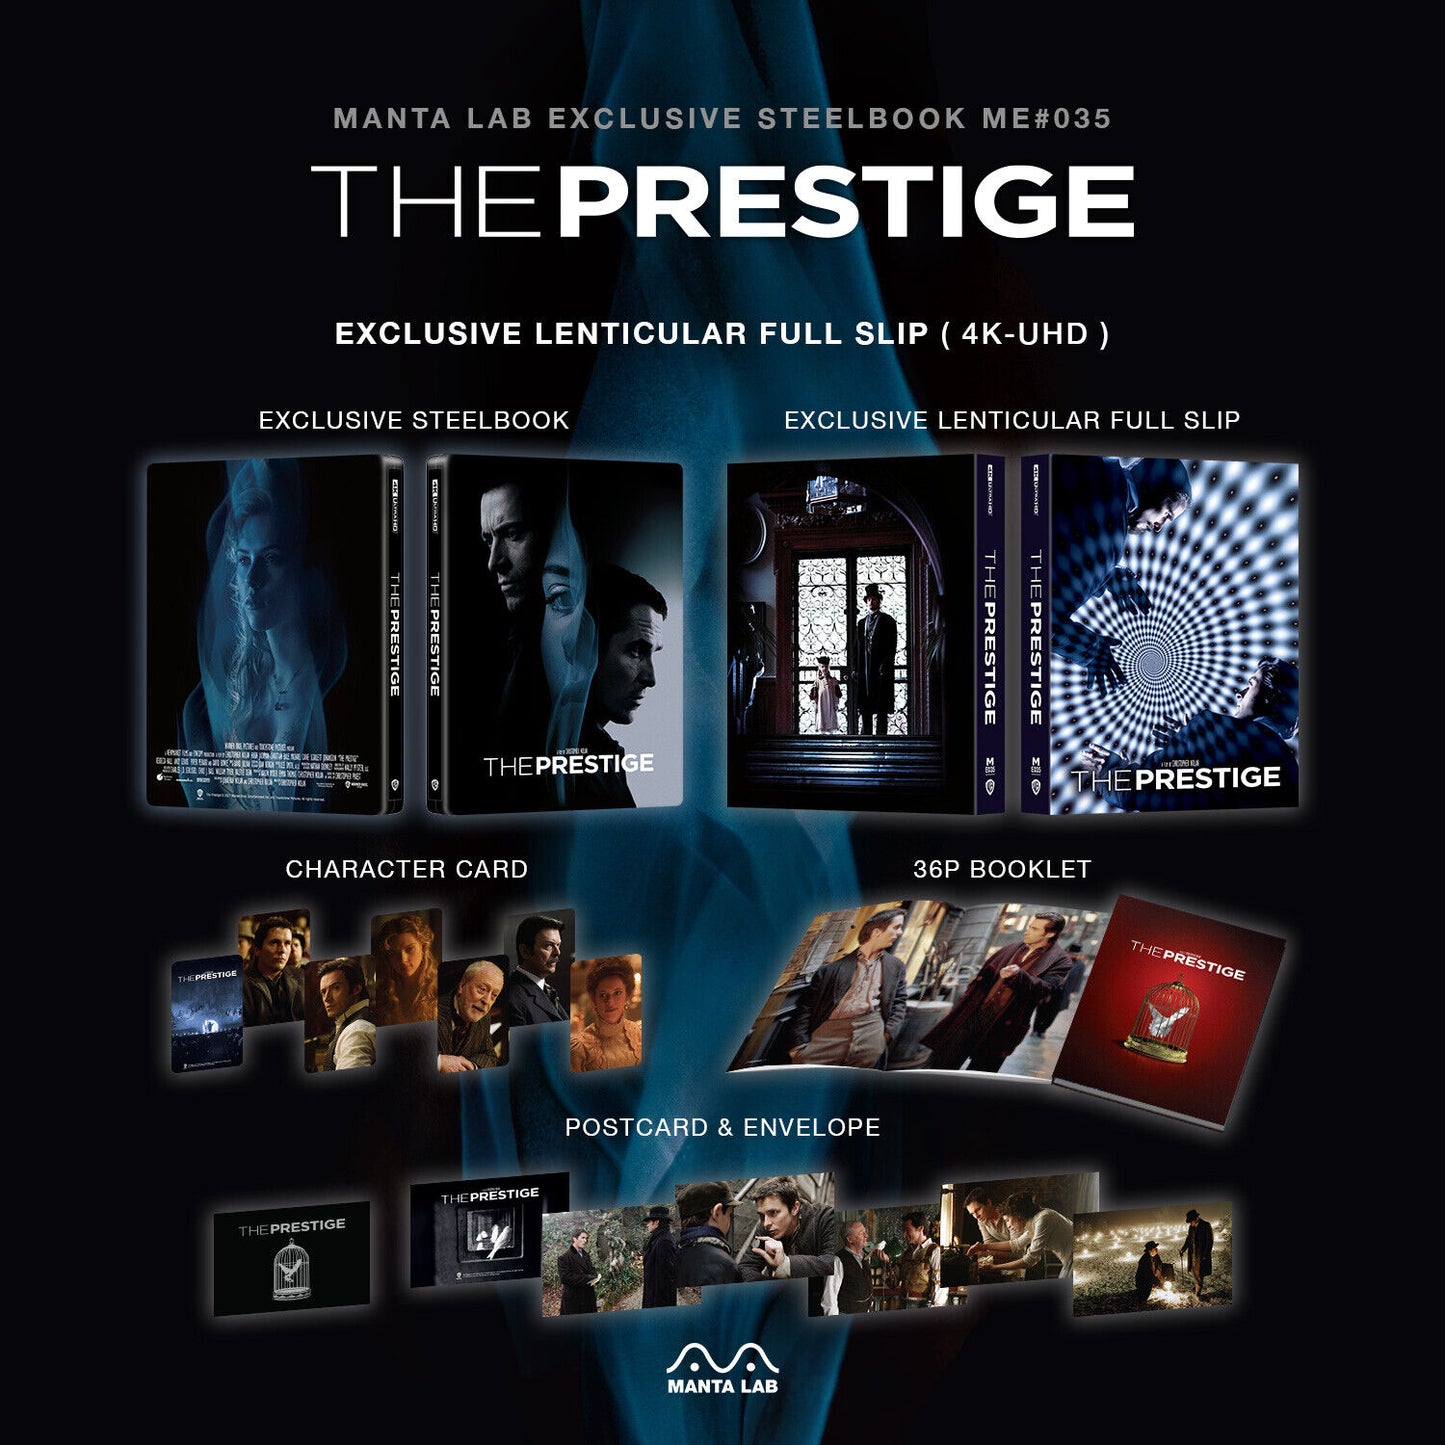 The Prestige 4K Blu-ray Steelbook Manta Lab Exclusive ME#35 One Click Box Set